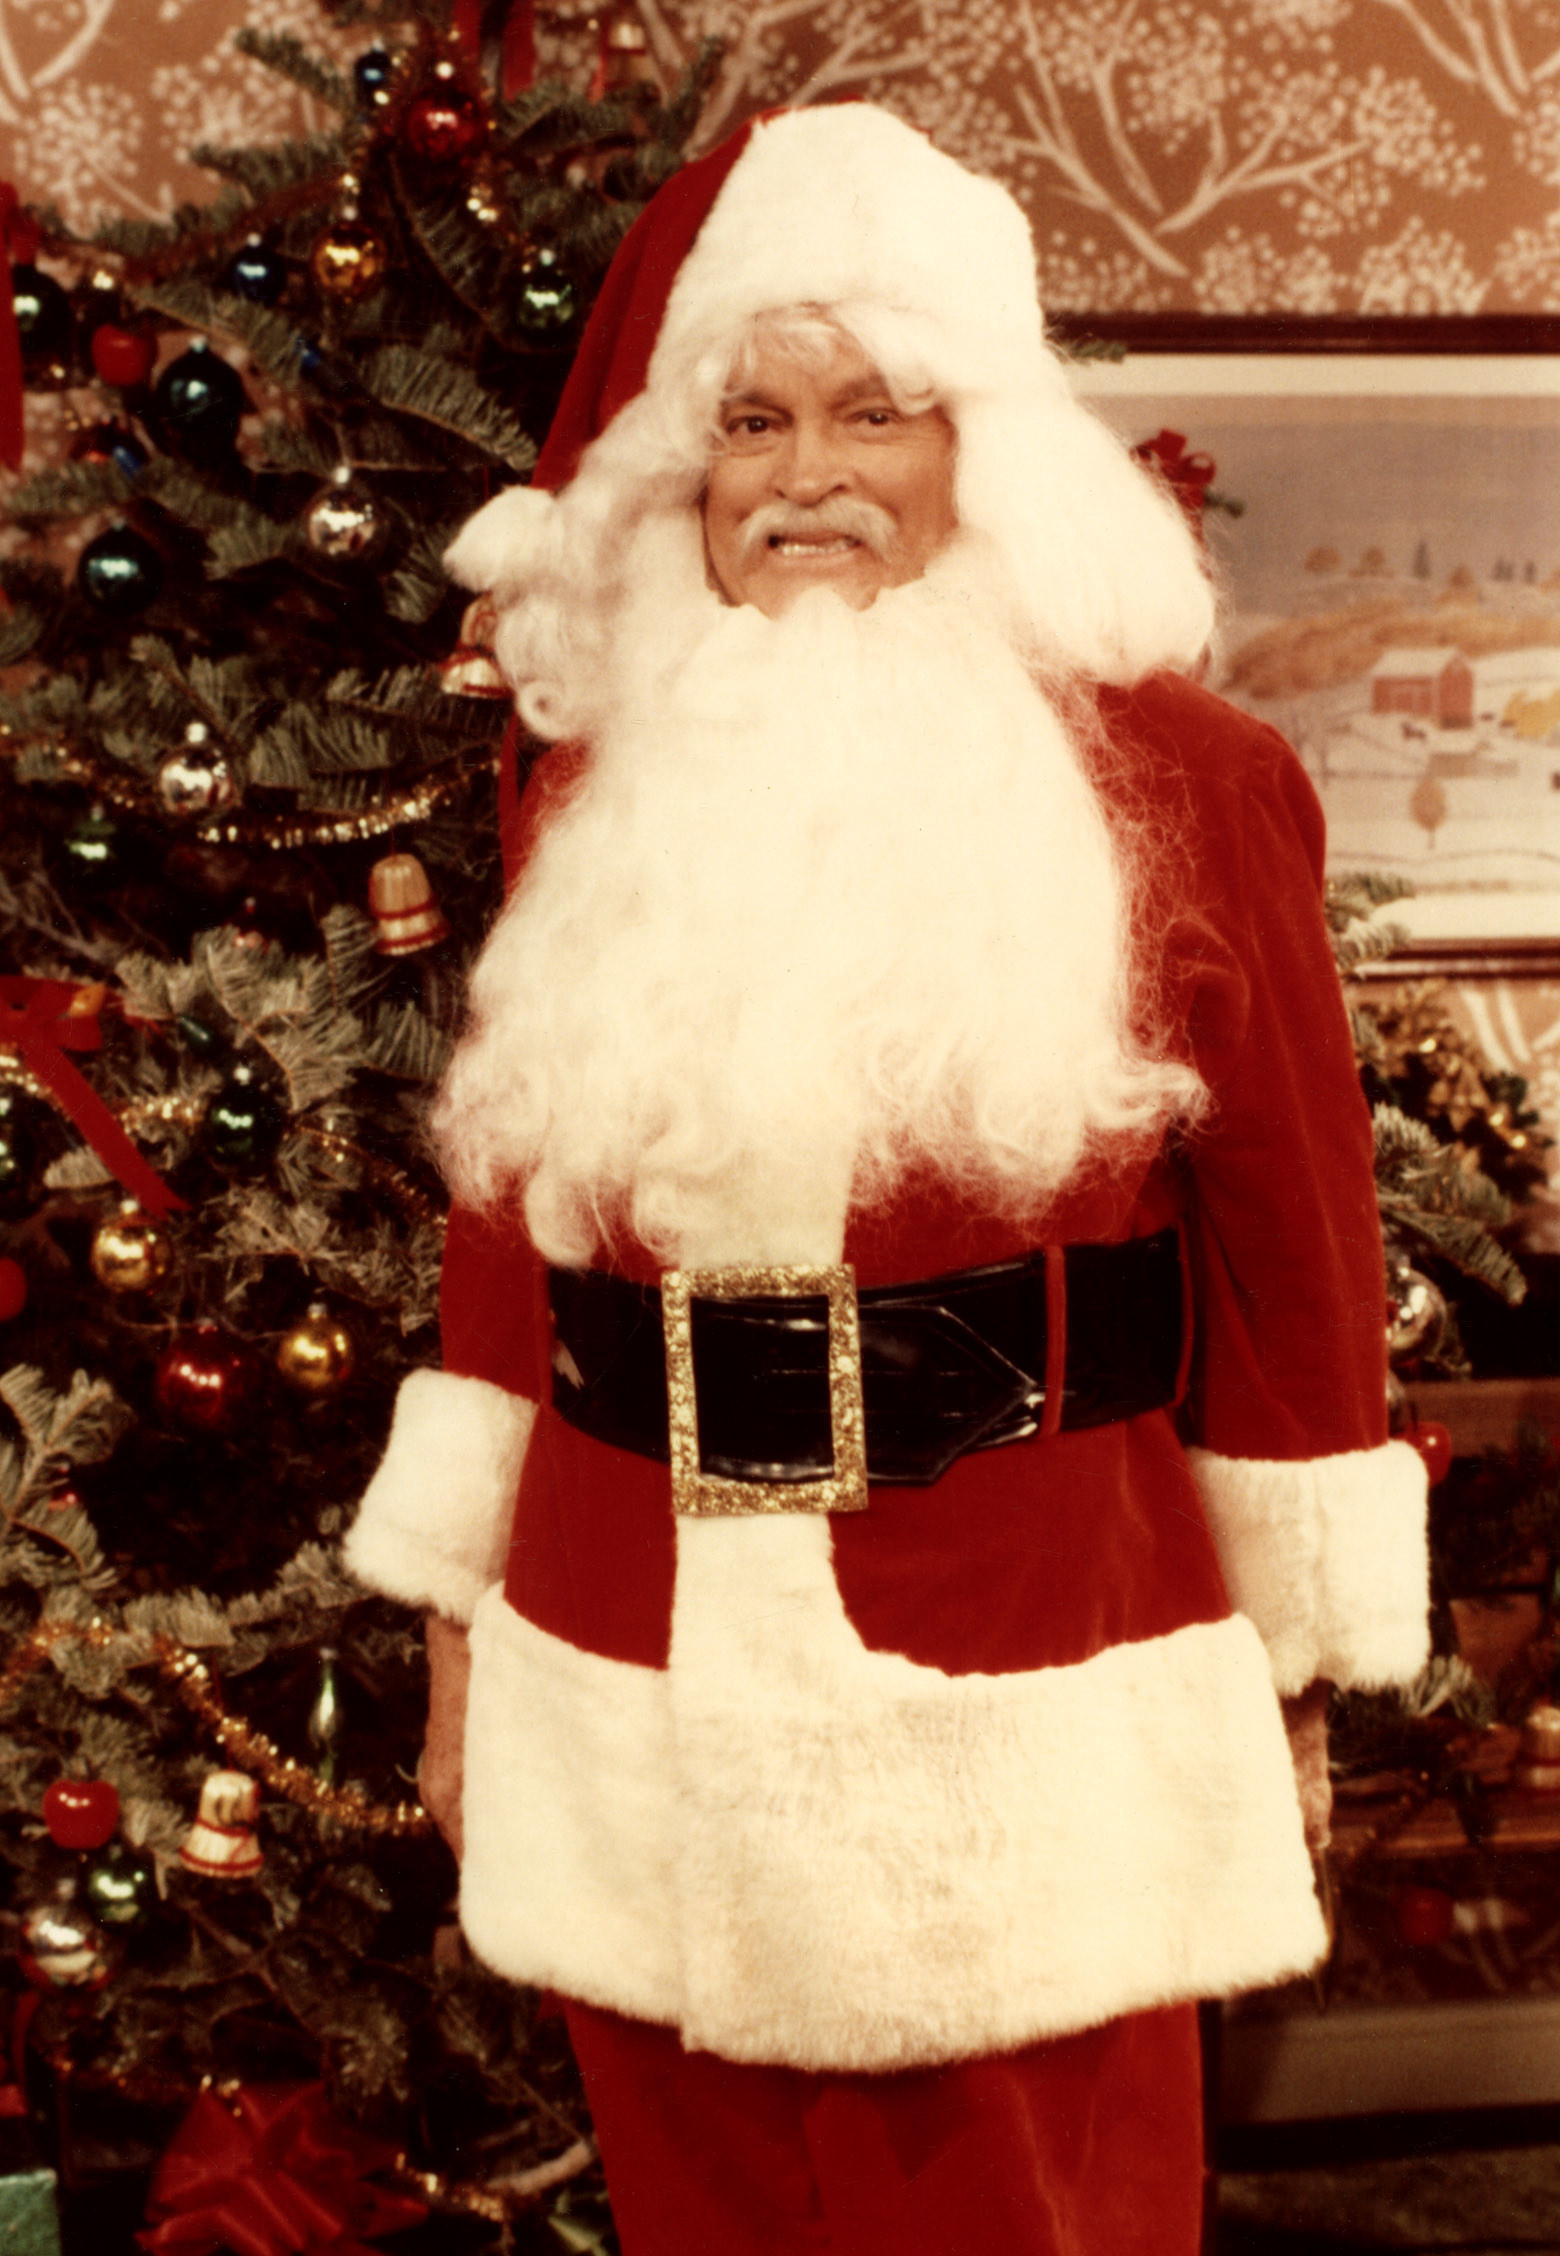 A man dressed like Santa